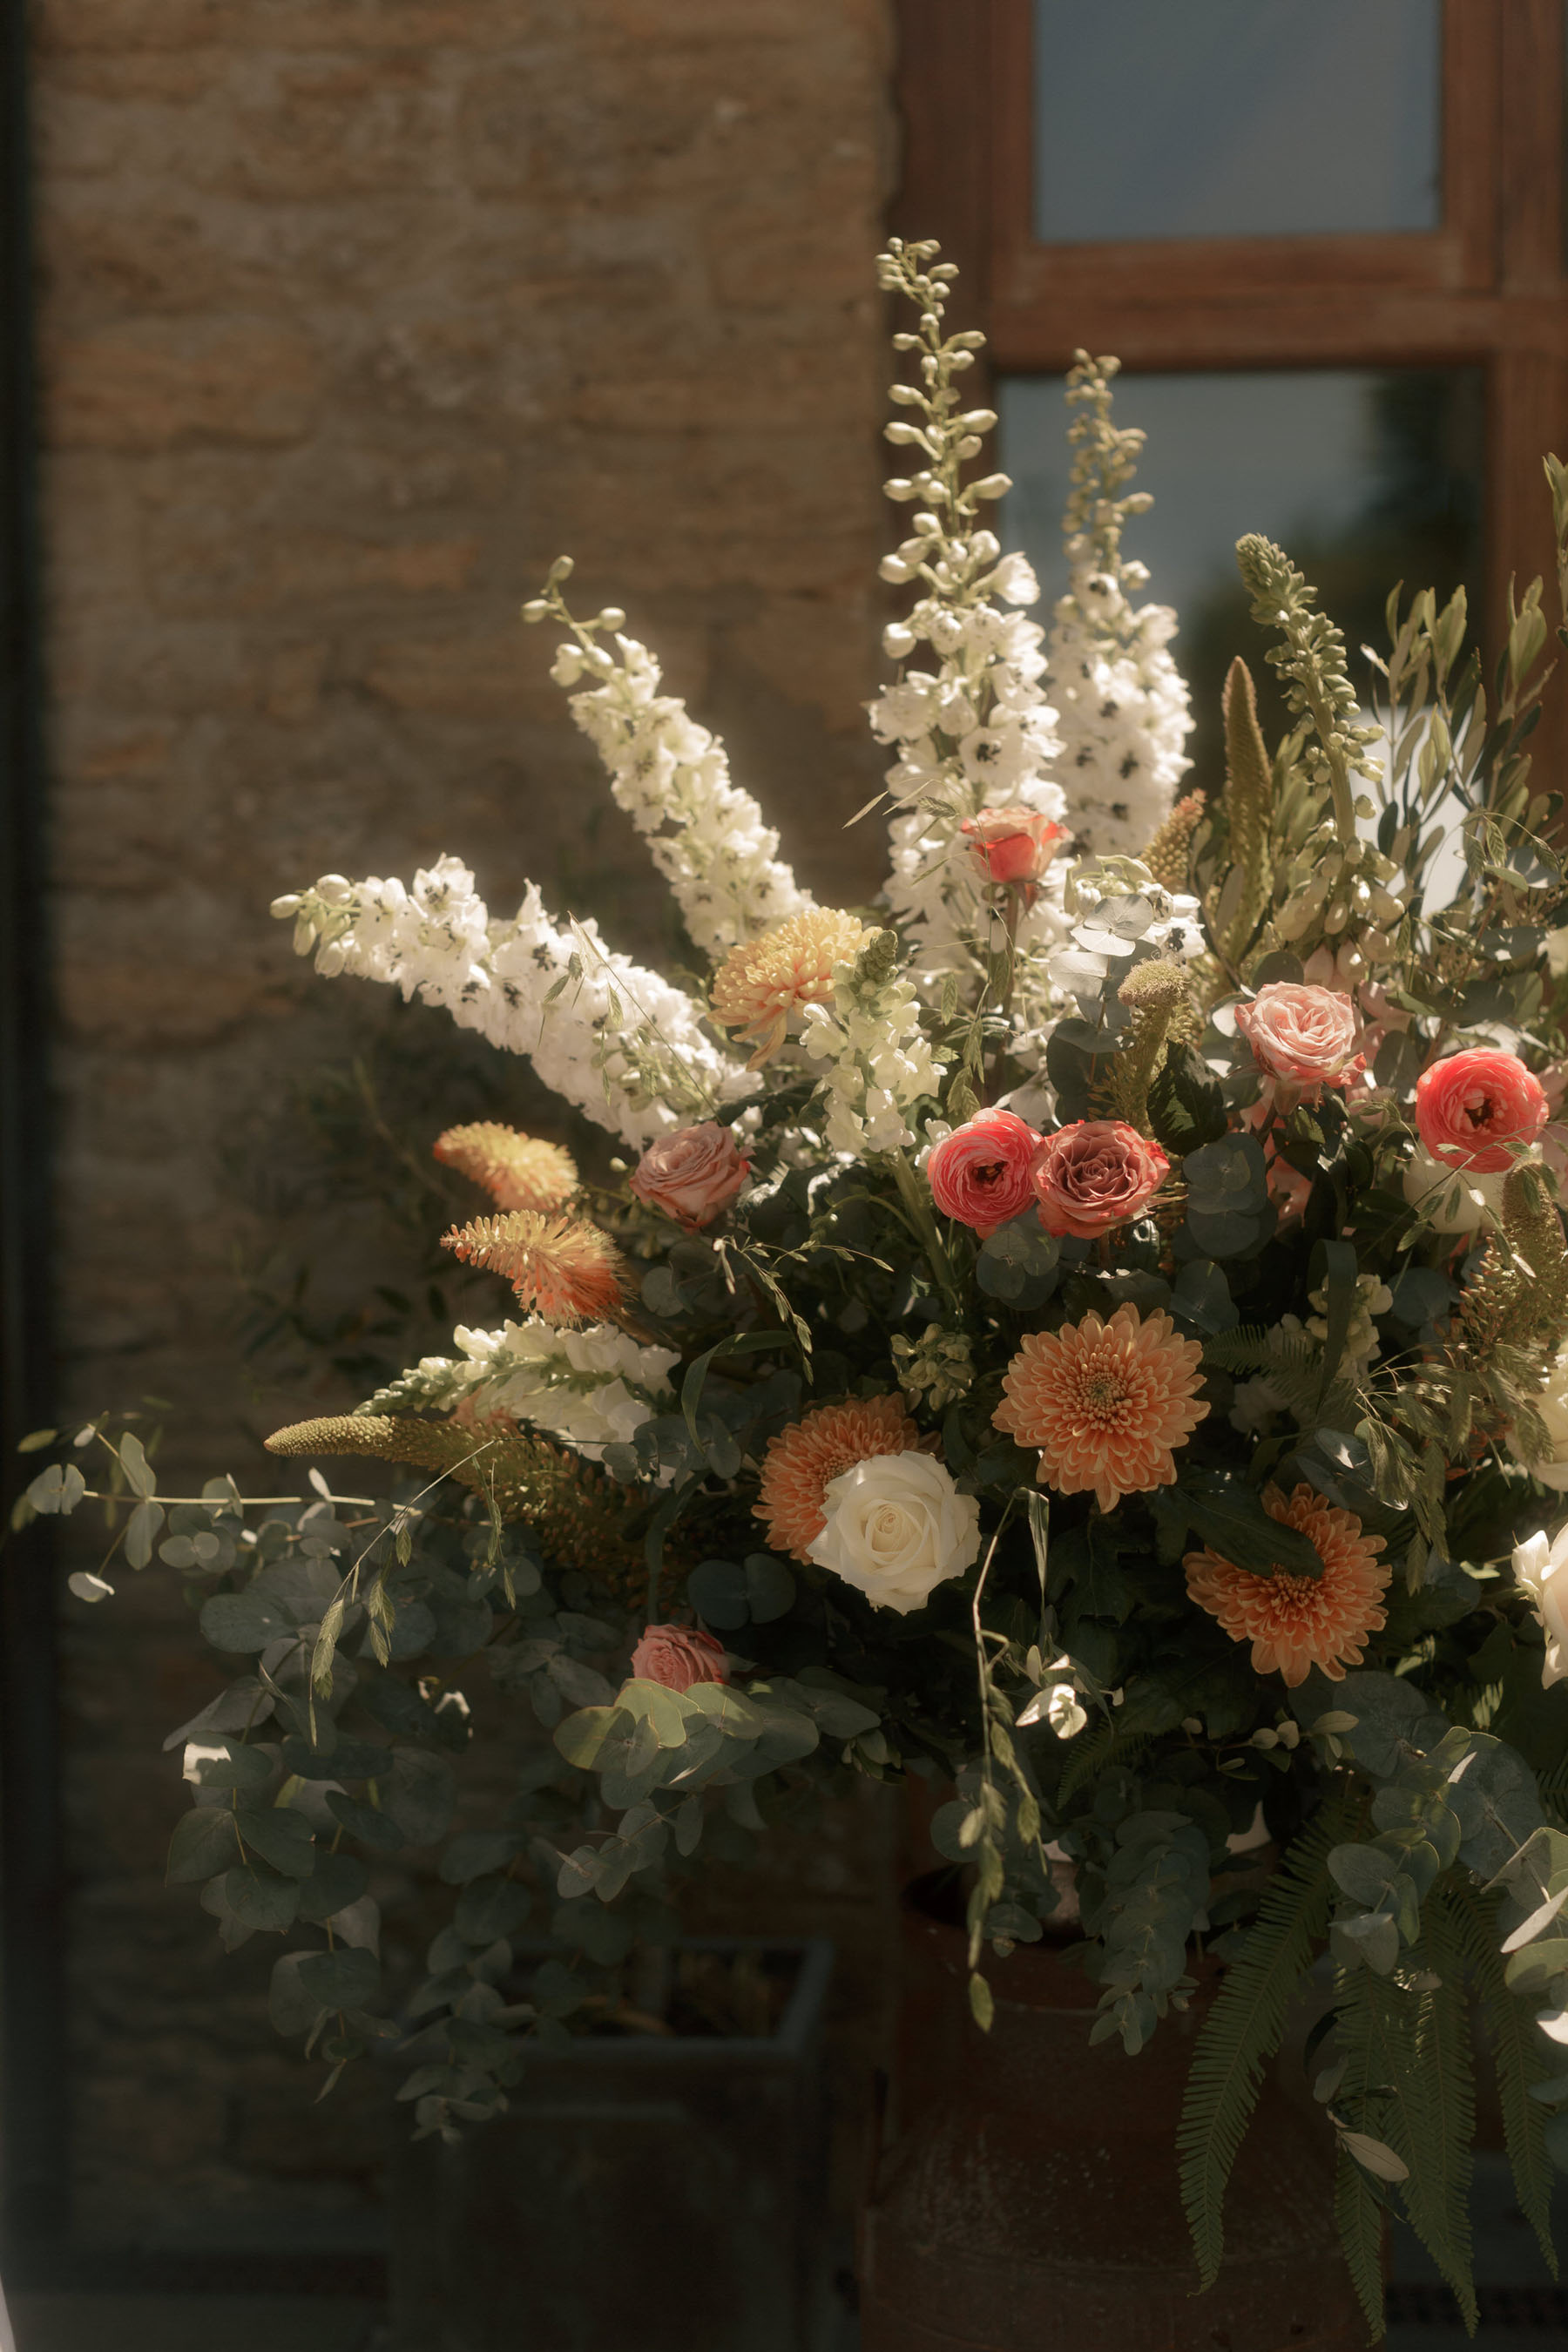 Bramble & Wild wedding flowers